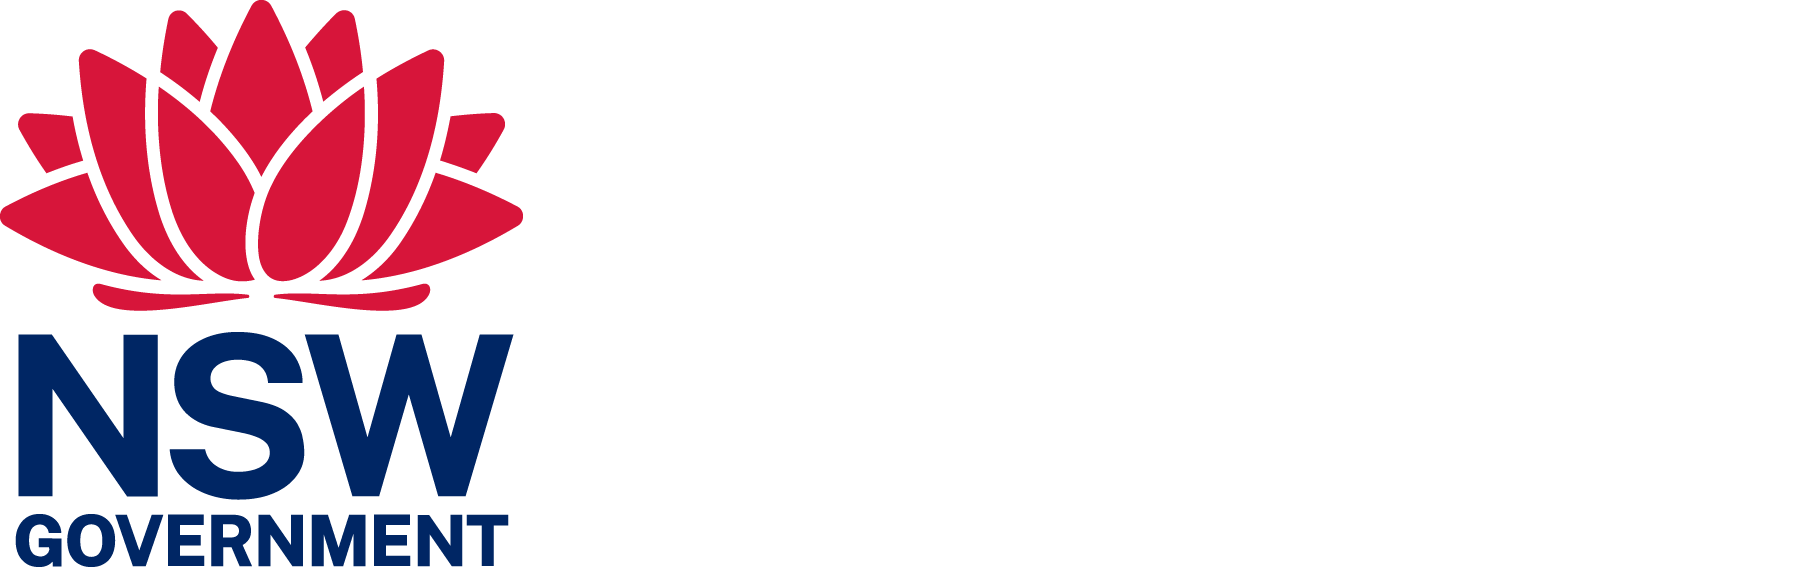 NSW Goverment logo